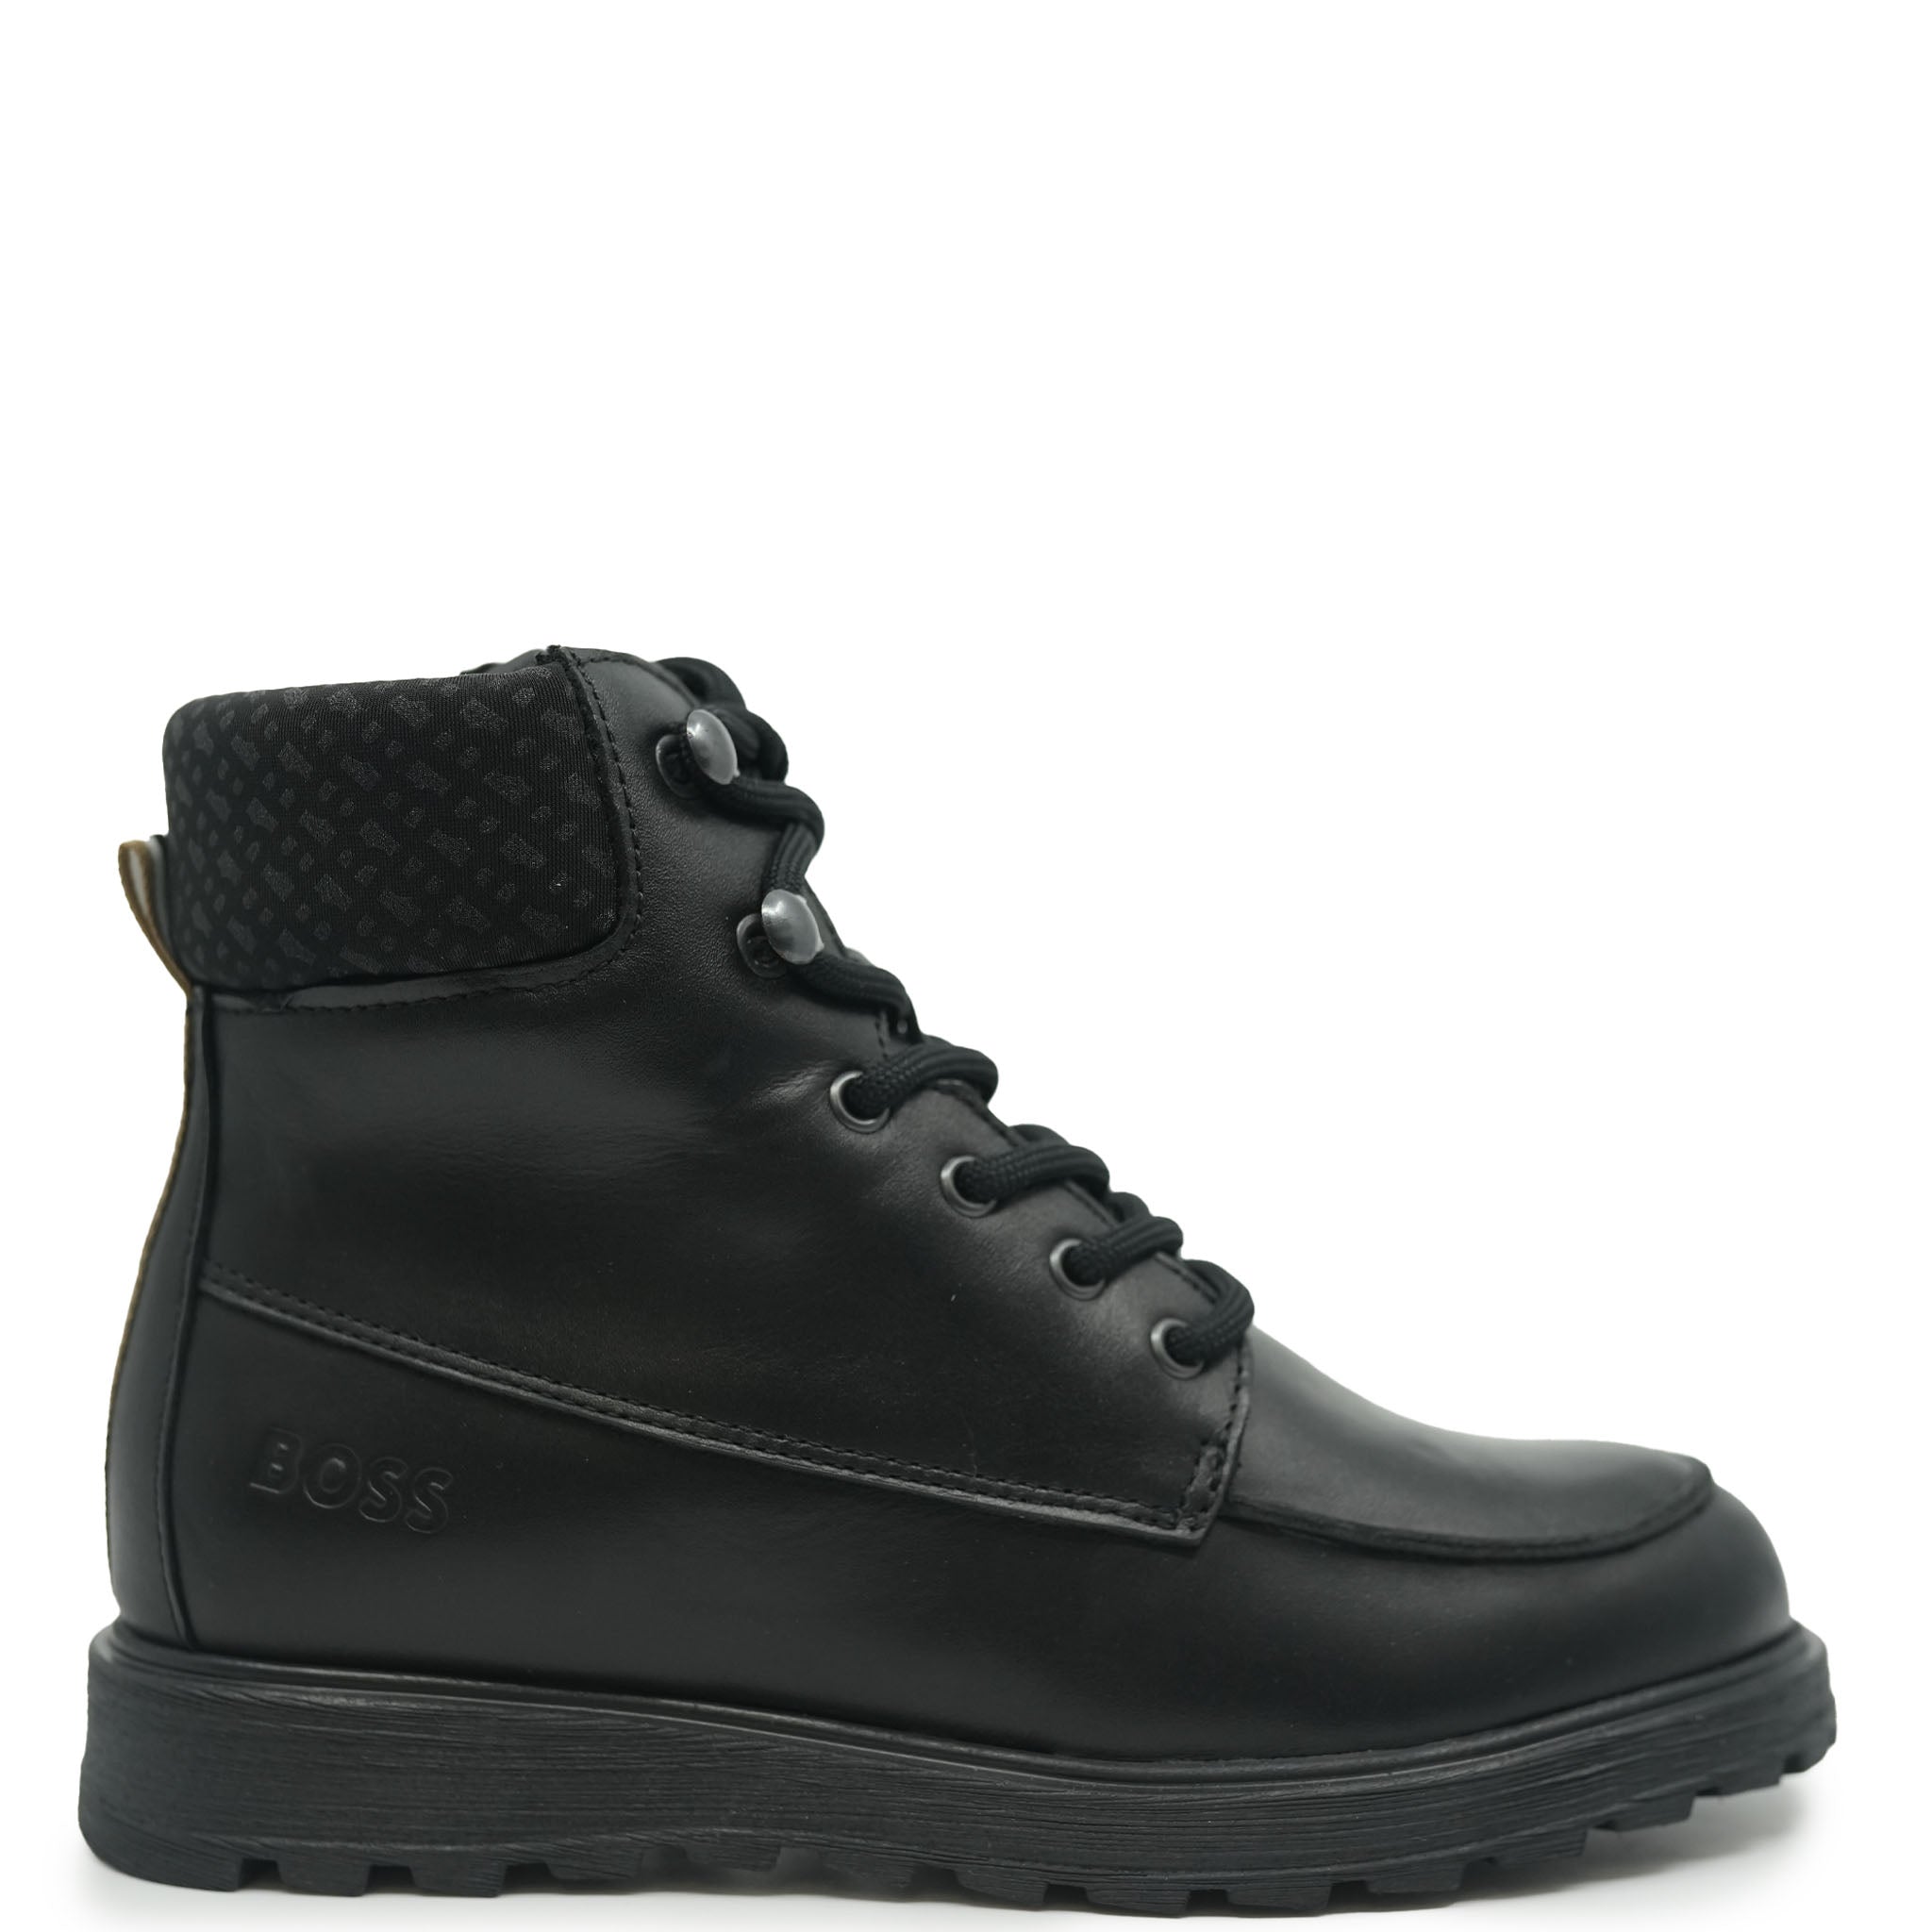 Hugo Boss Black Lace Up Sneaker Boot - Tassel Shoes